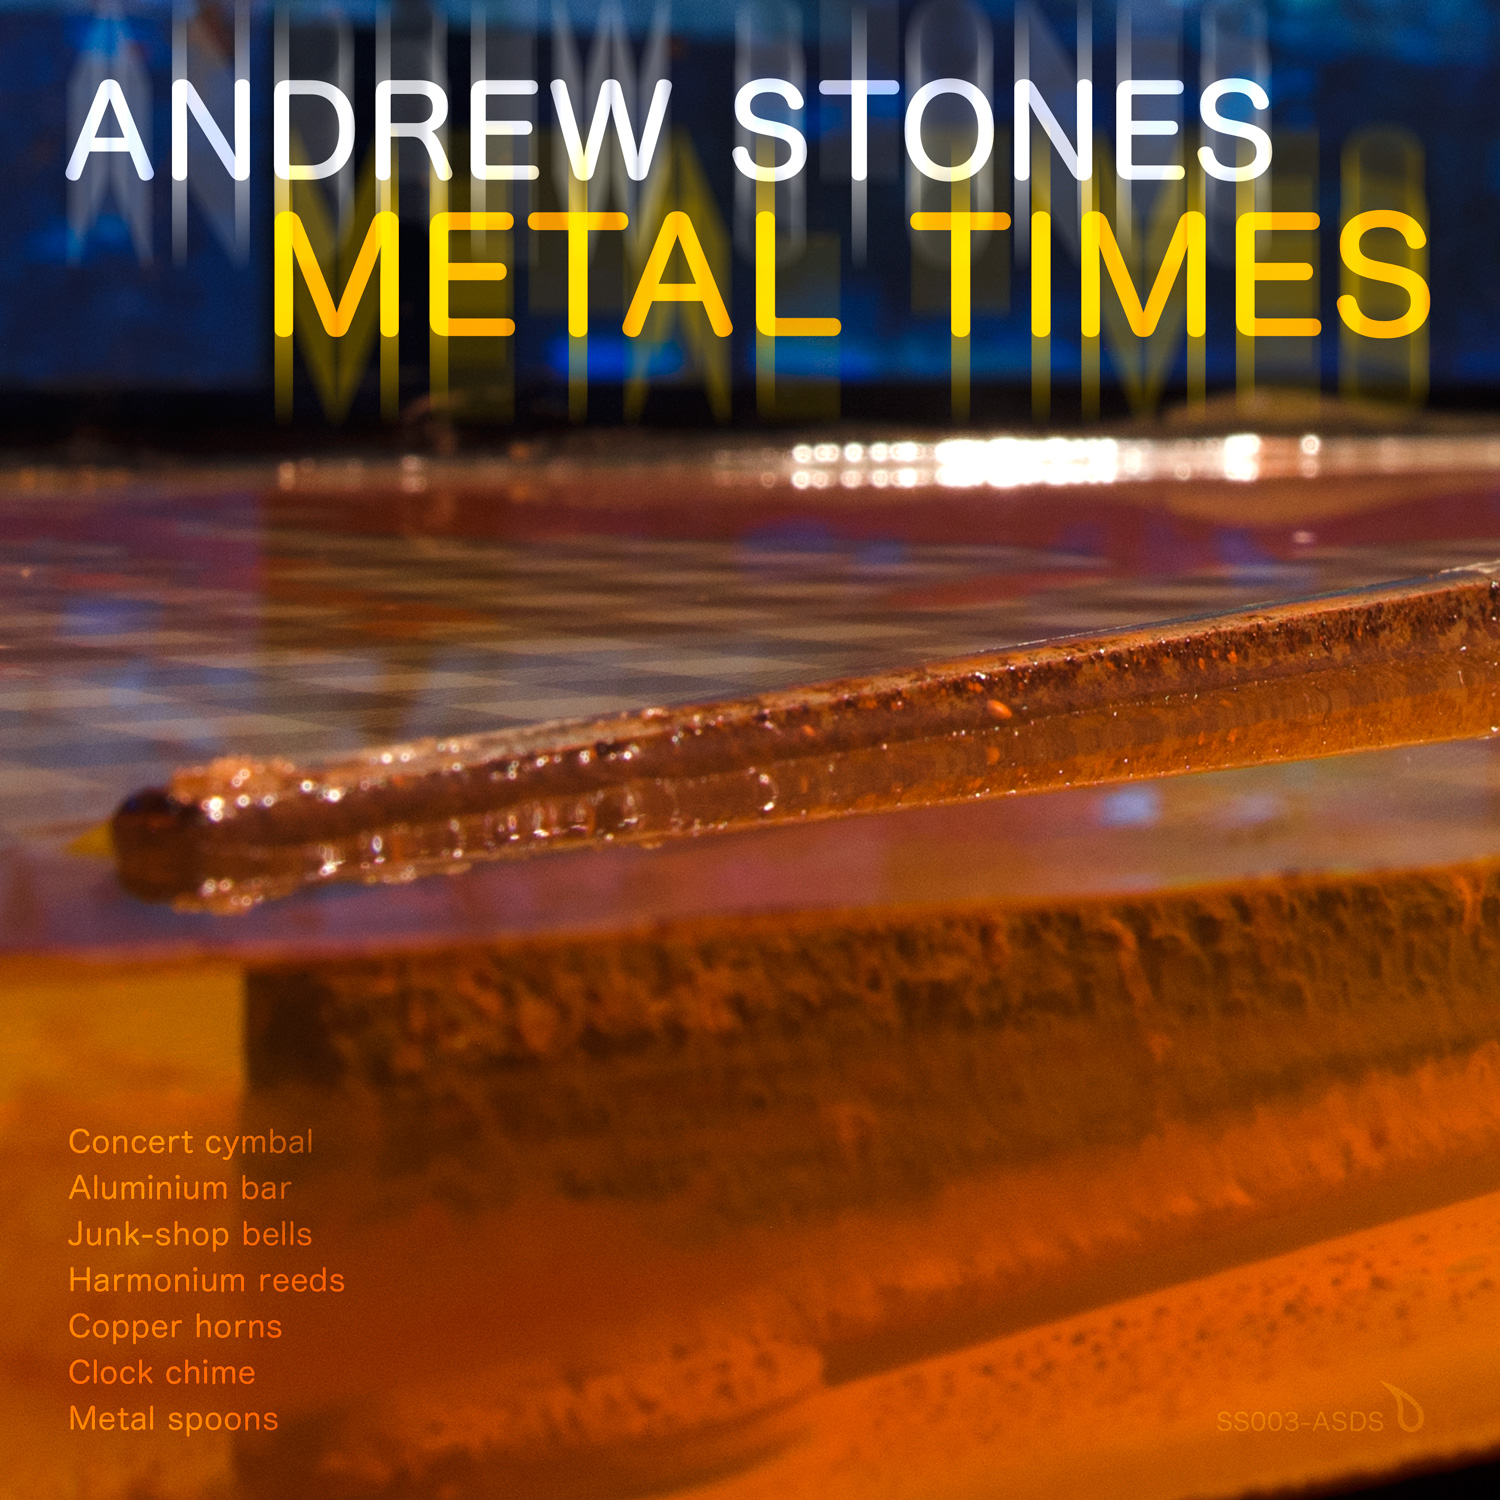 Andrew Stones - Metal Times. Digital single cover art 2020.